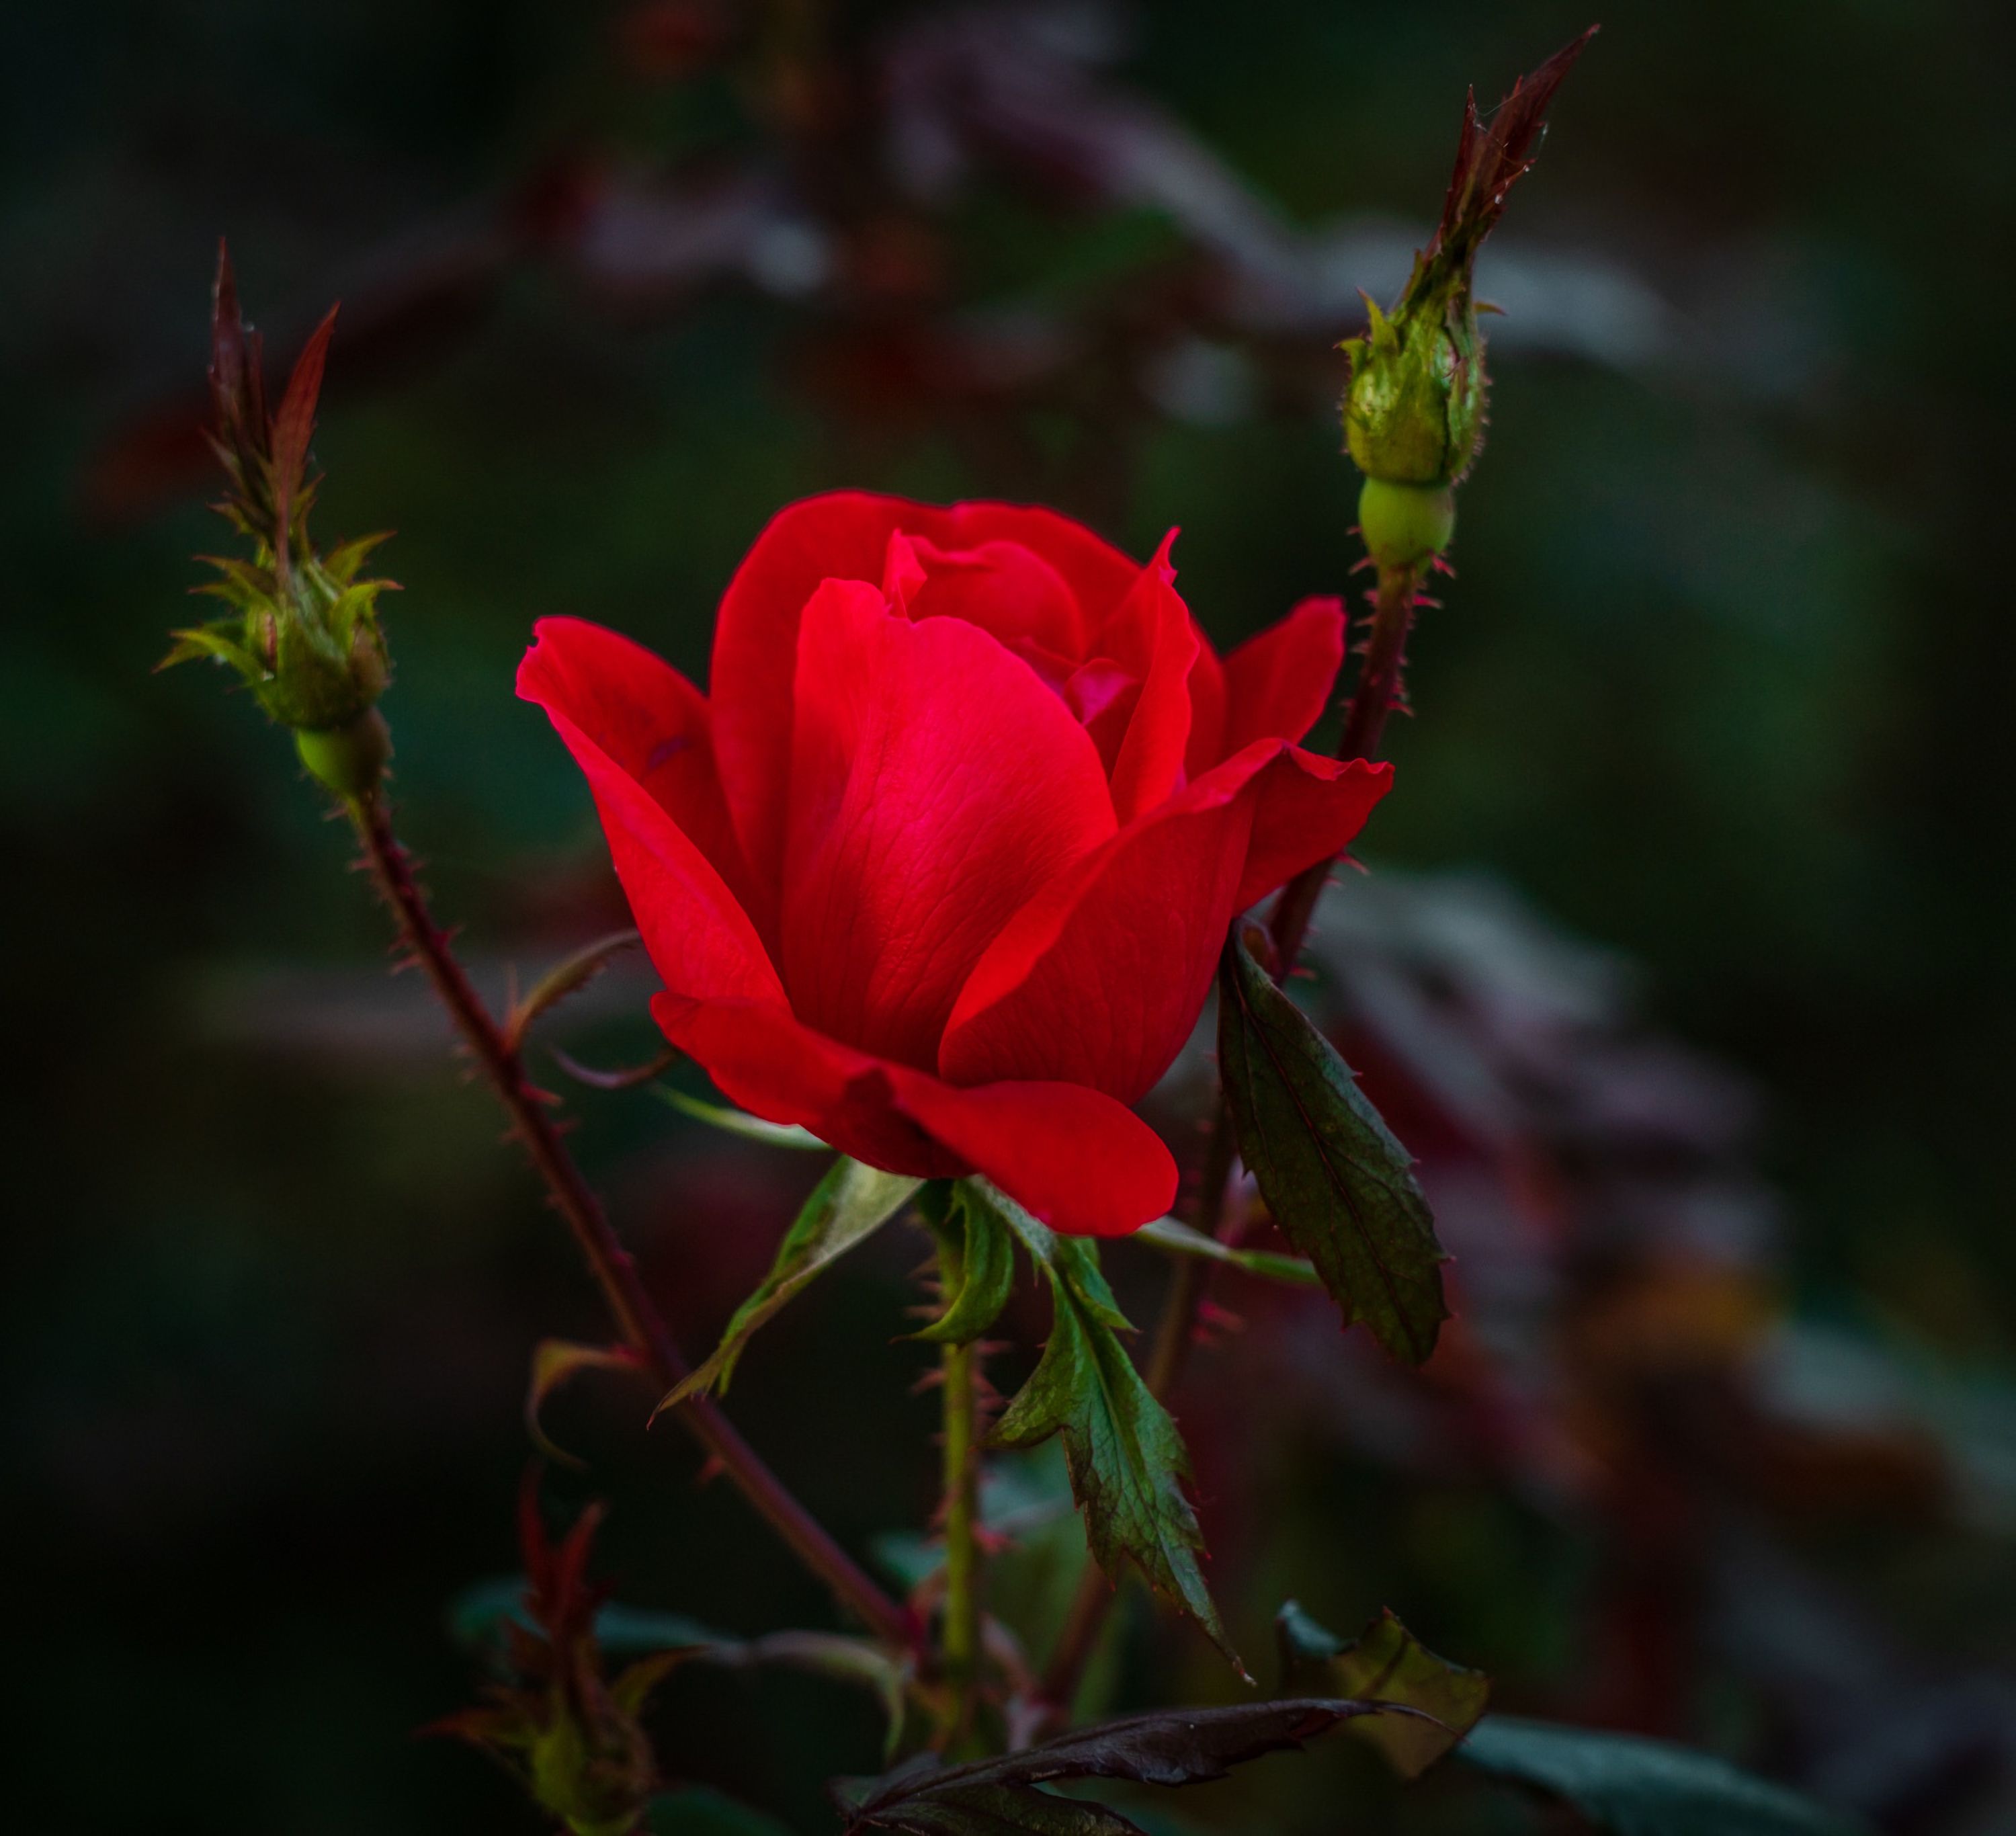 flowers, bush, red, rose flower, rose, petals, bud, garden